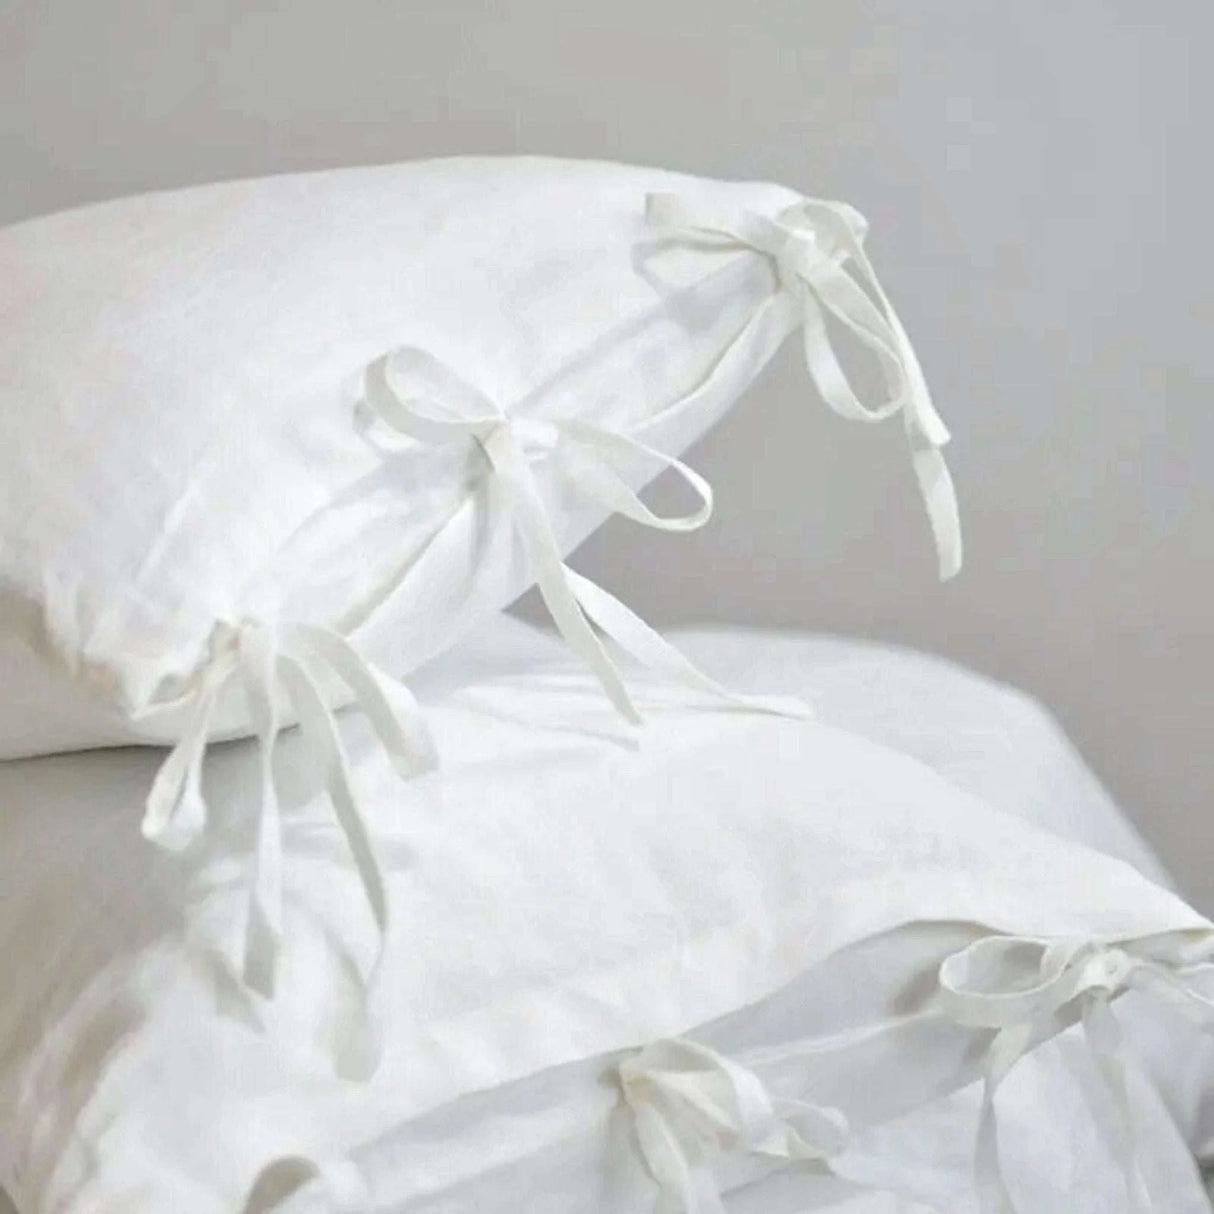 White Linen Nordic Pillowcase Set - King Size (2PCS) White Linen Nordic Pillowcase Set - King Size (2PCS) 1005004122341746-off white-48x74cm 2pcs pillowcases & shams 51